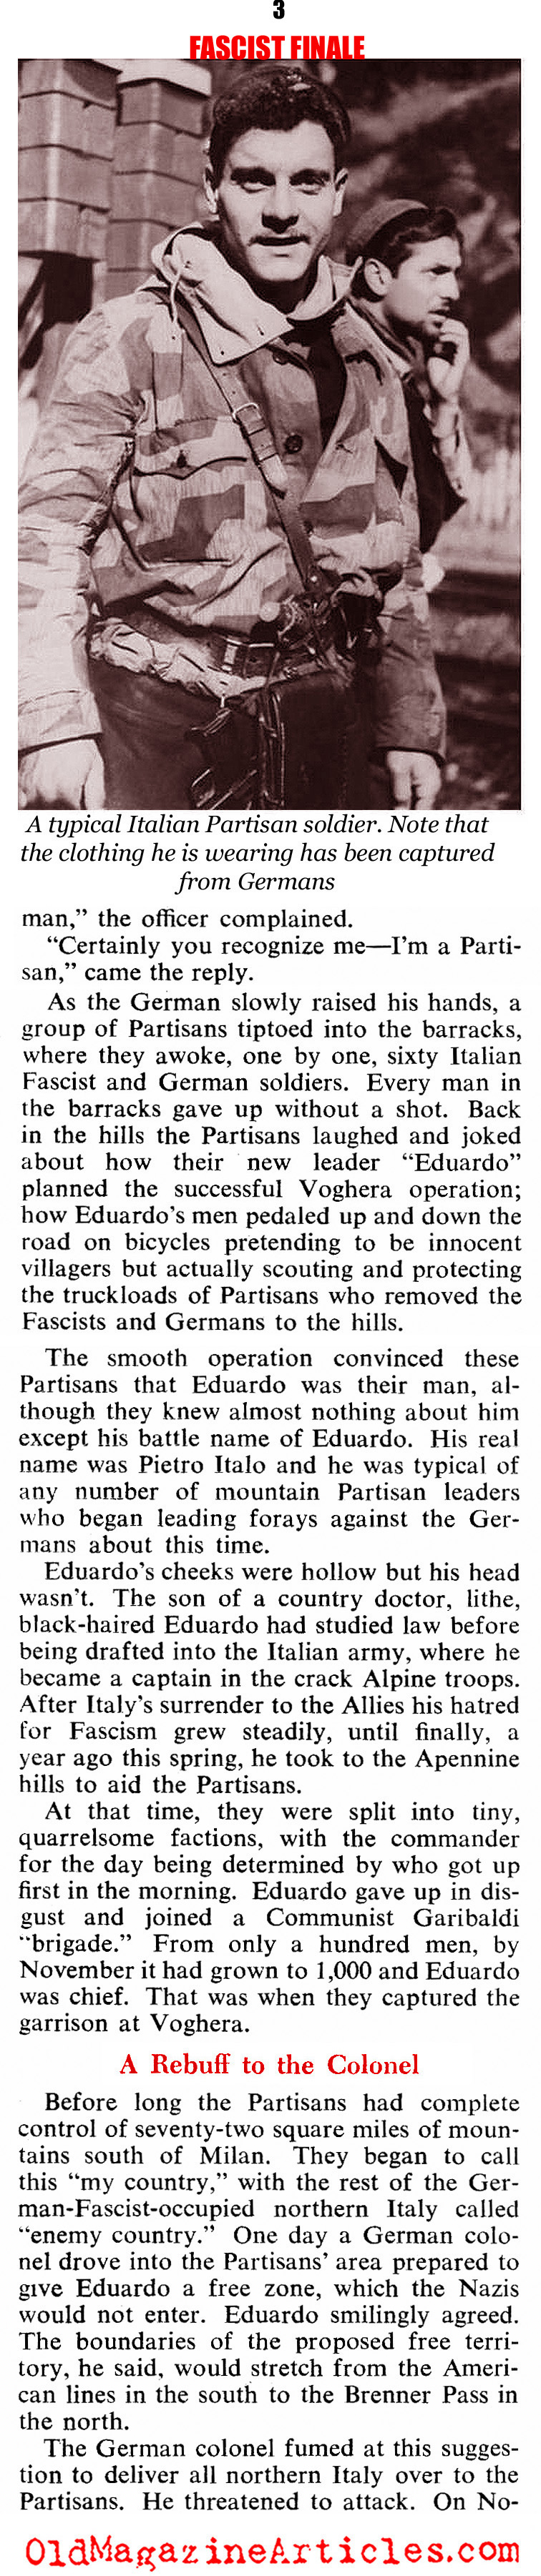 ''Fascist Finale'' (Collier's Magazine, 1945)